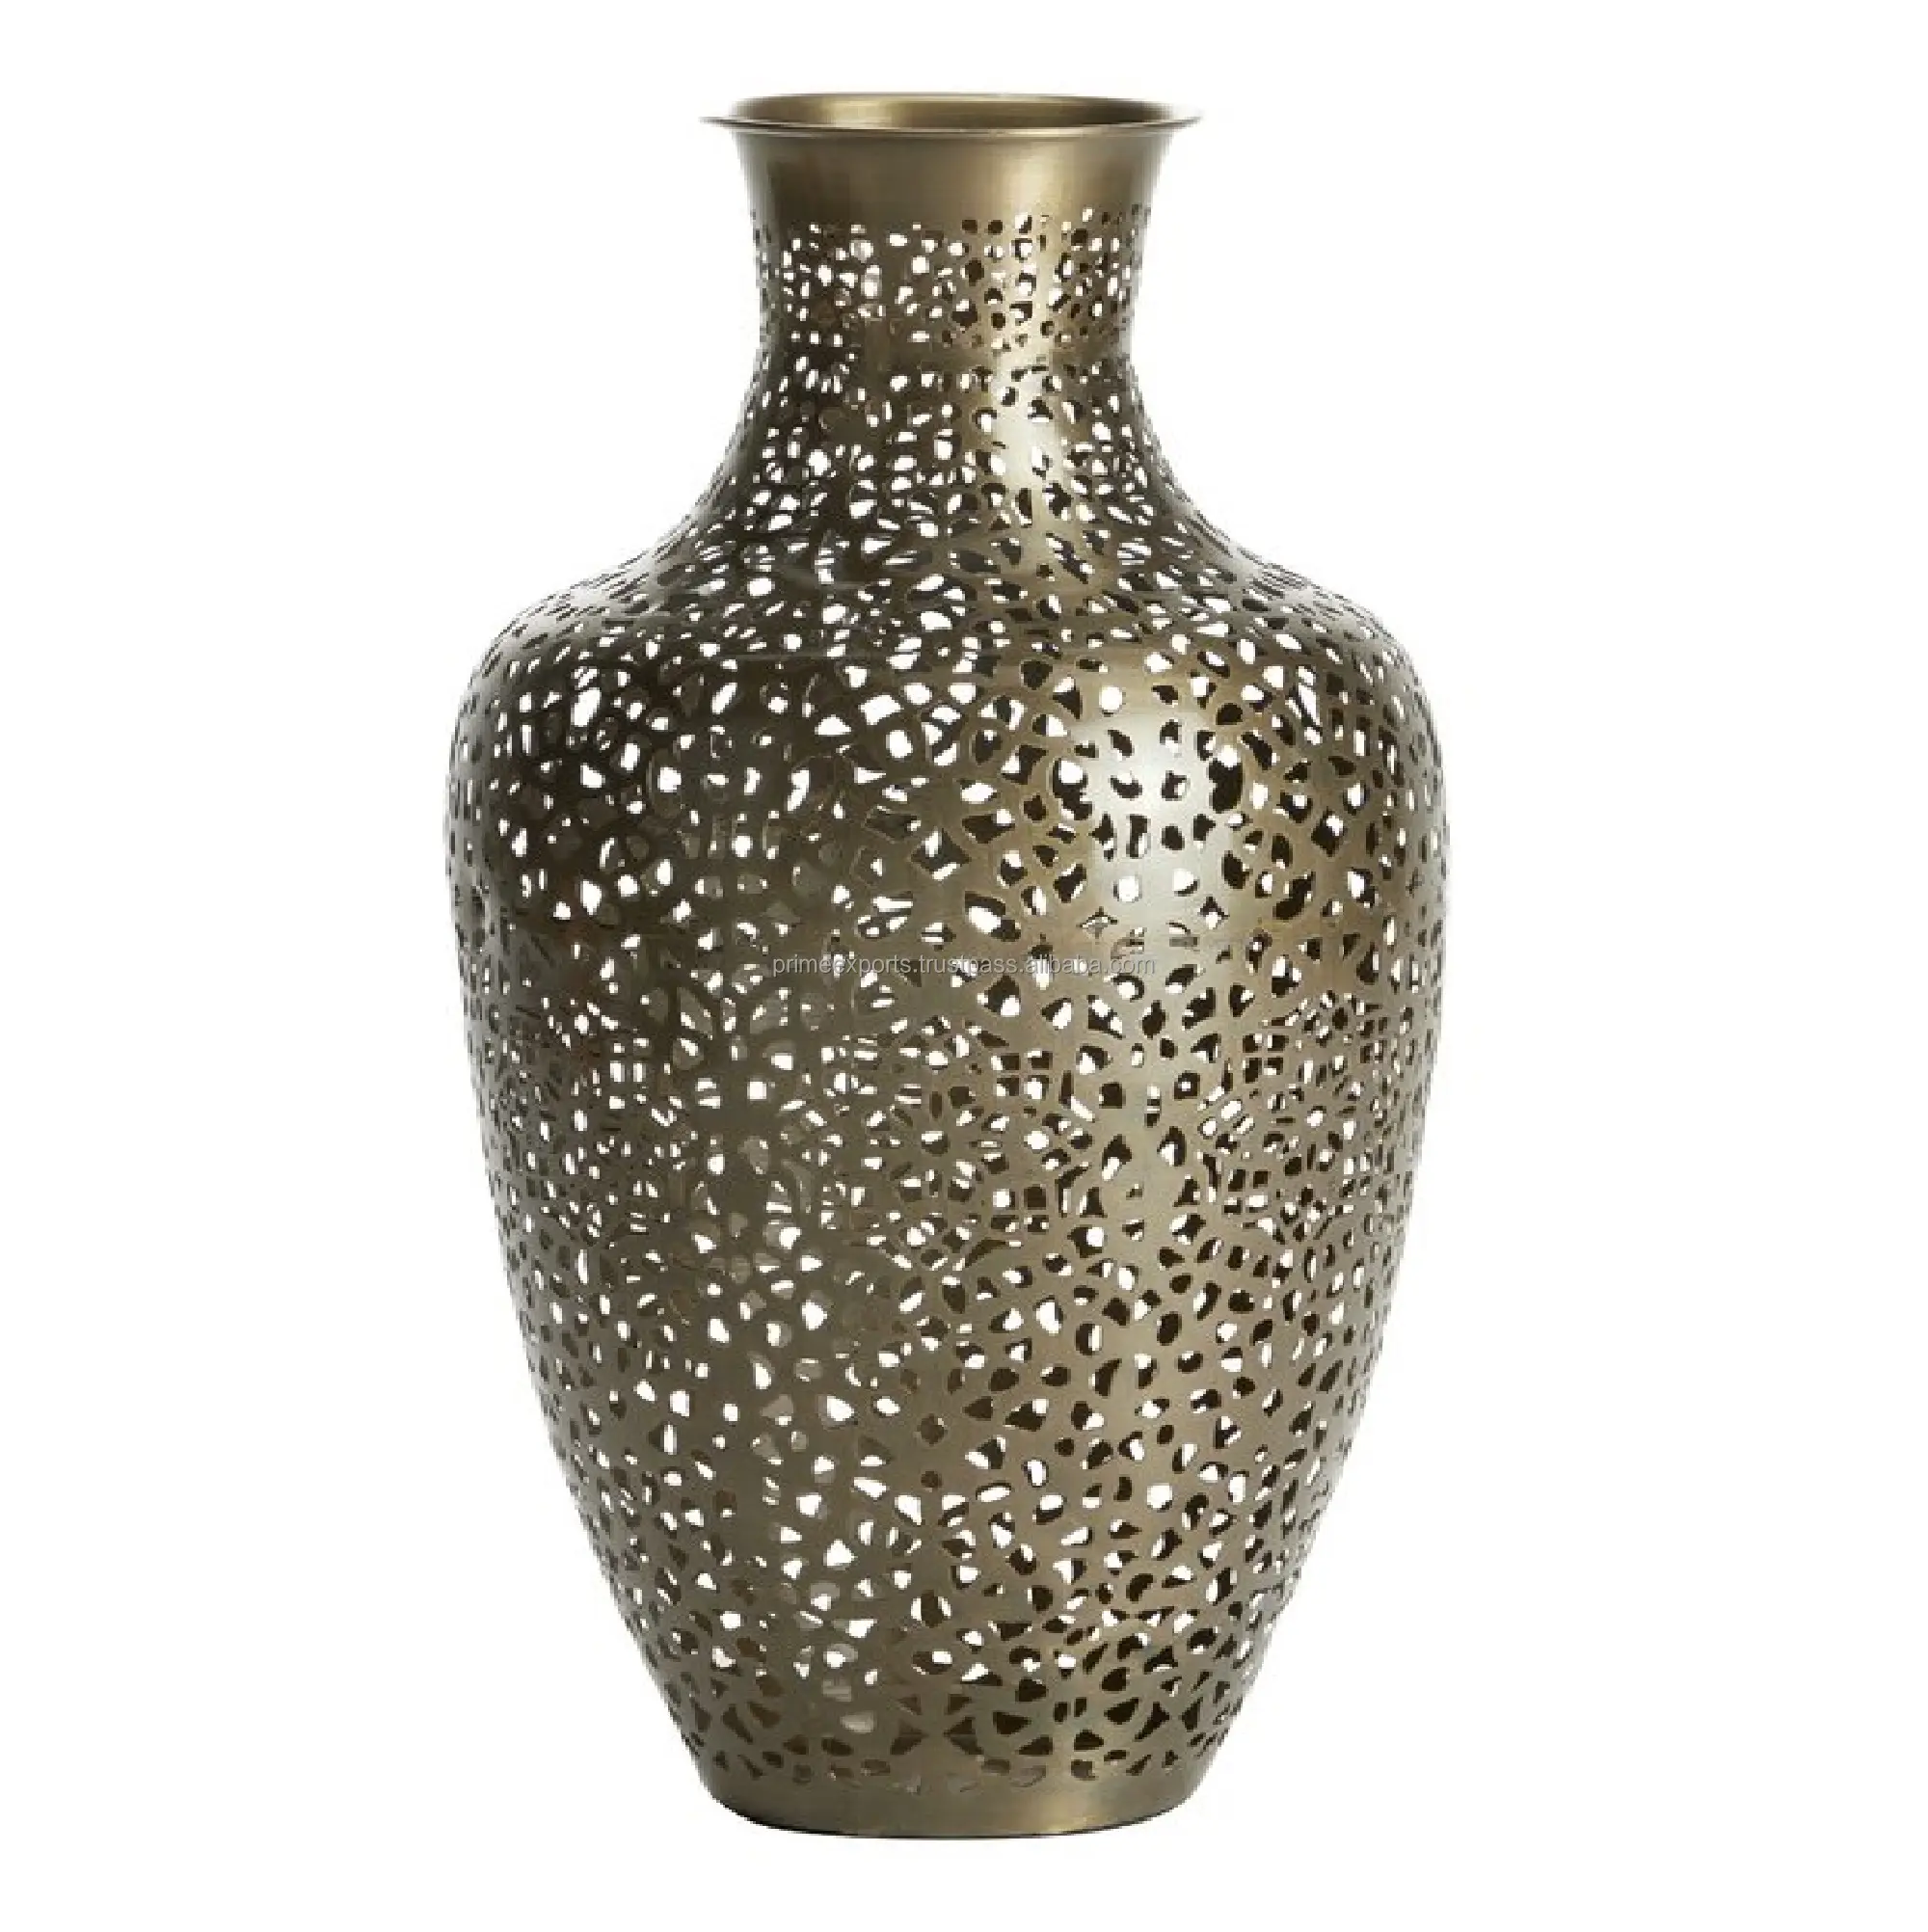 Arábia e turca estilo bronze antigo barato atacado taxas mais venda decorativo metal flor vaso de mesa e vasos de chão.